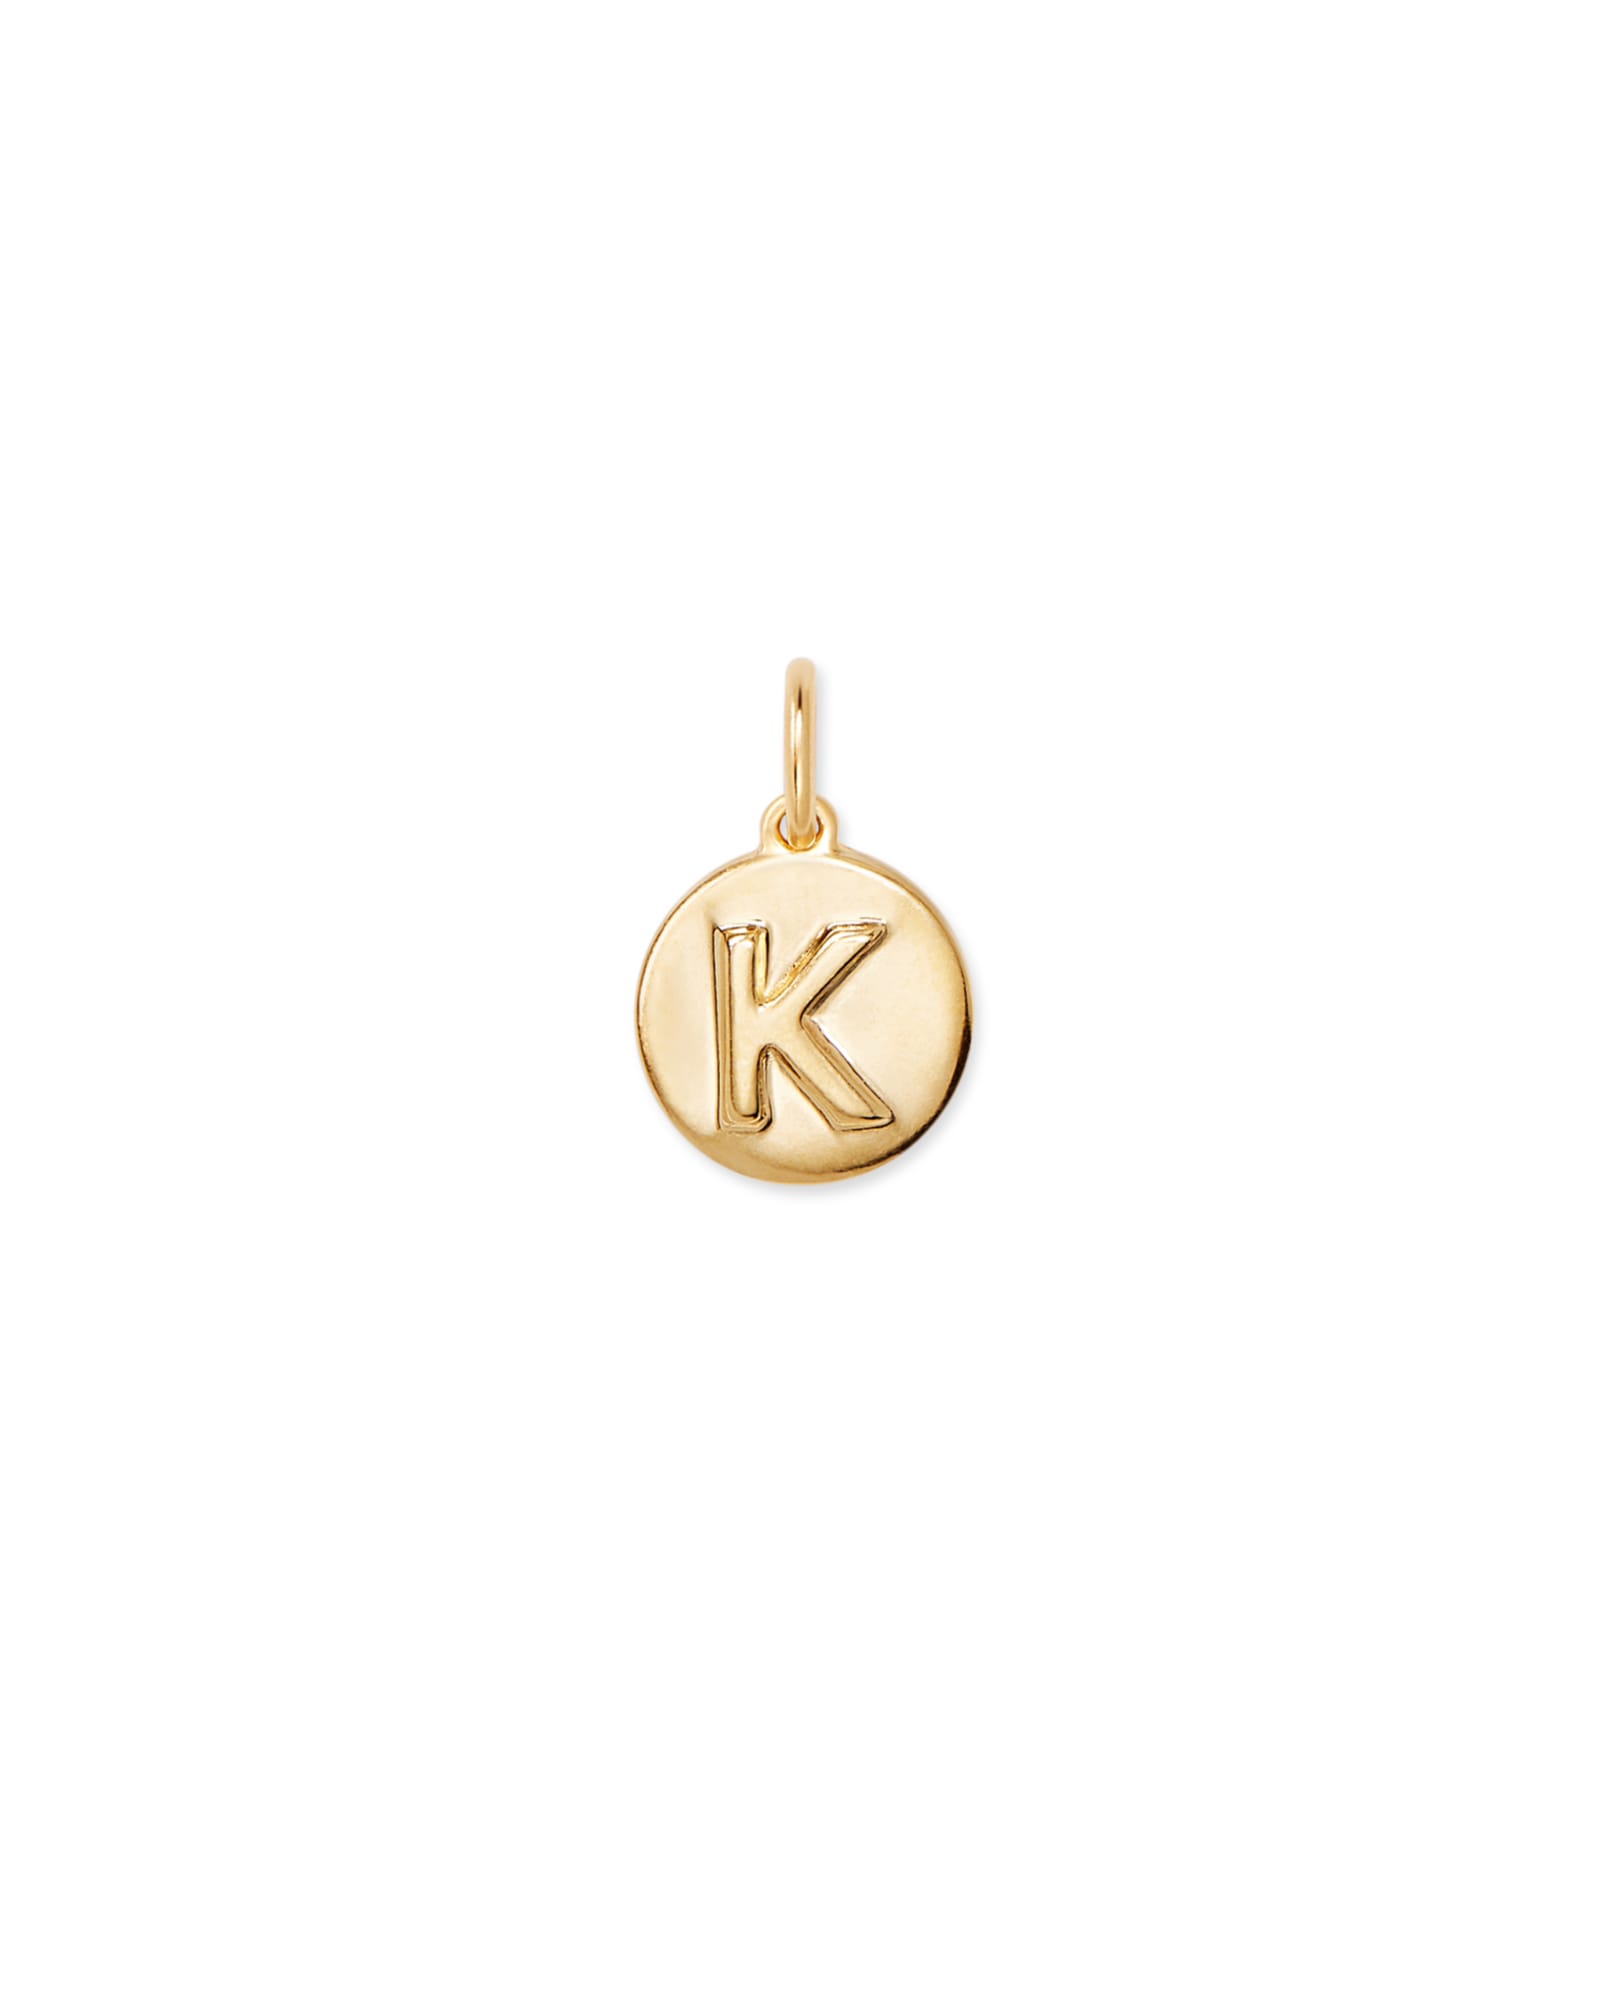 Kendra Scott Letter K Coin Charm in 18k Gold Vermeil | Sterling Silver